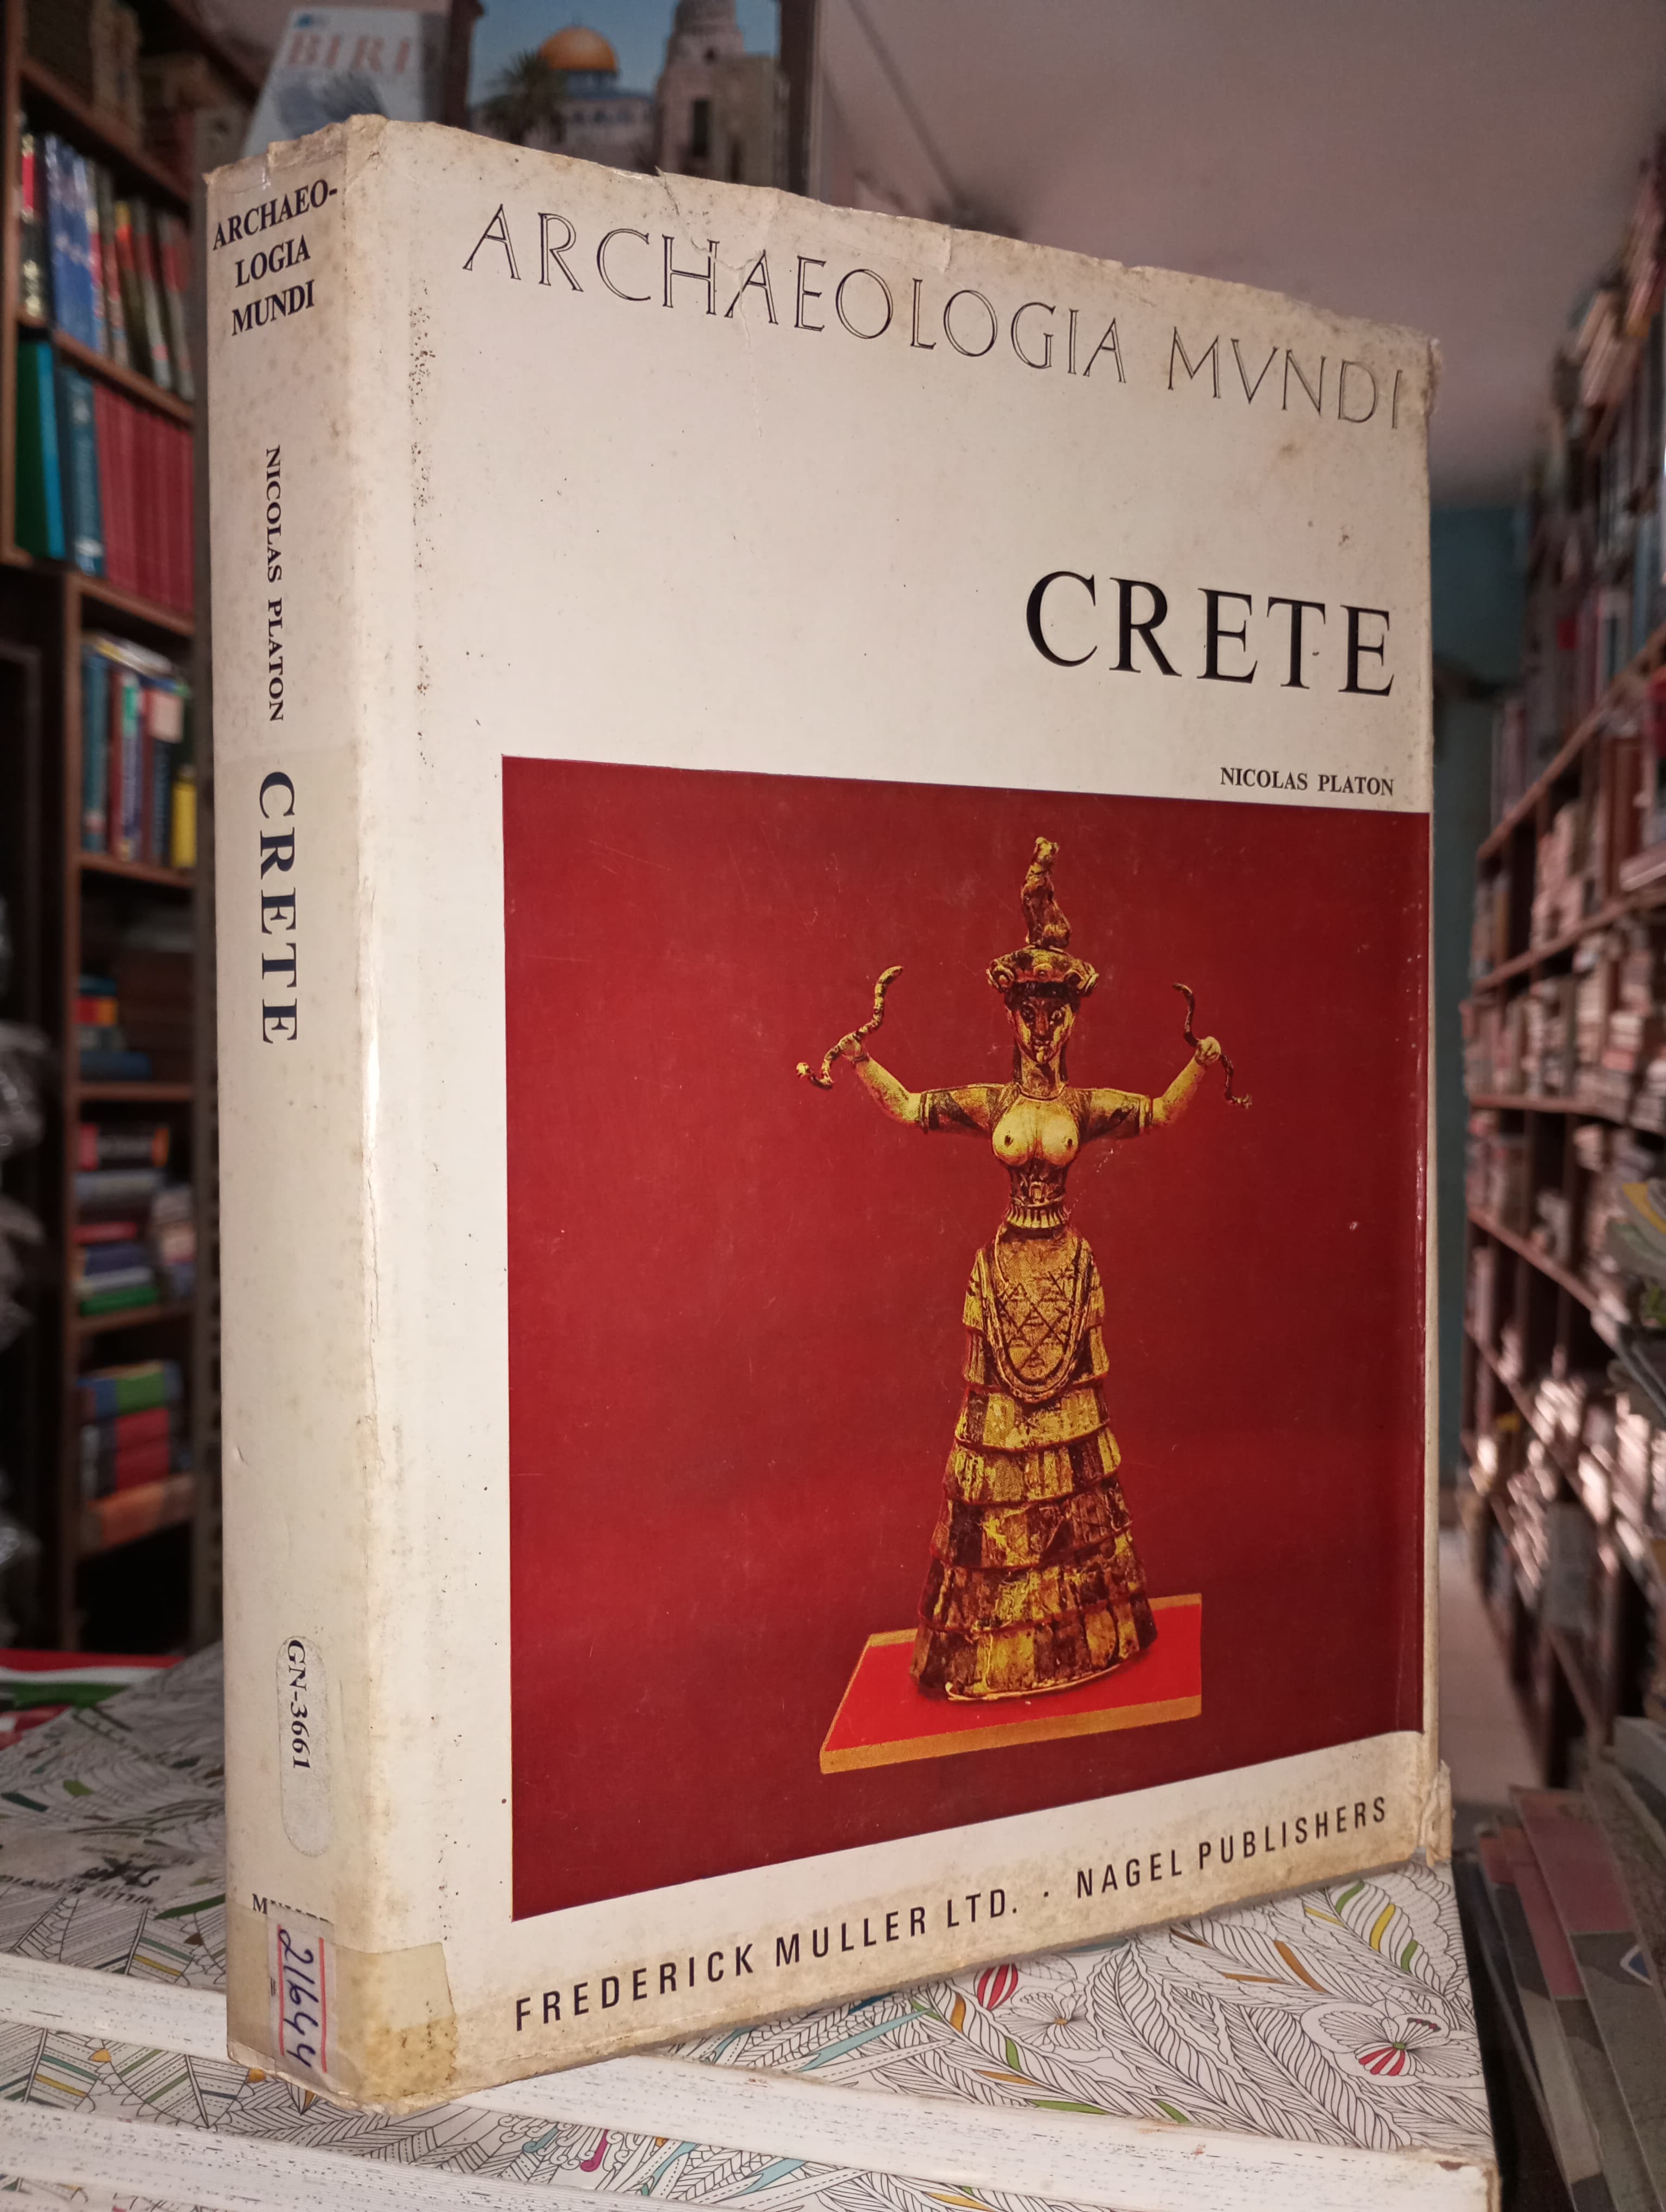 crete archaeologia mundi by nicholas platon. original hardcover